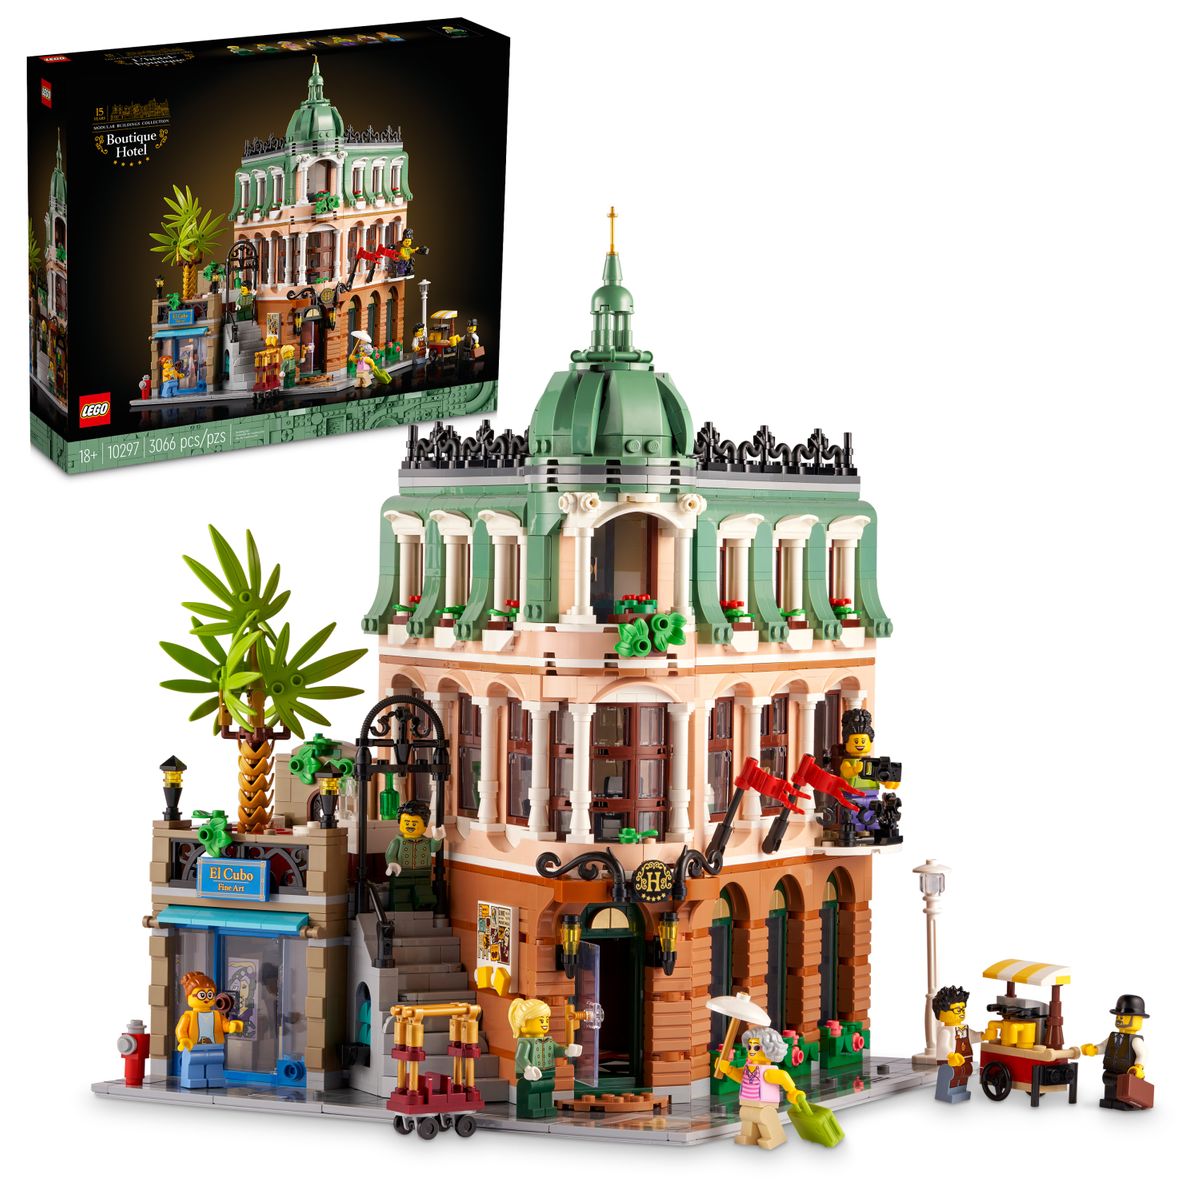 [RDY] [送料無料] LEGO ブティックホテル10297建築キット：驚きのある詳細なディスプレイ可能なホテル模型を作る 3,066ピース [楽天海外通販] | LEGO Boutique Hotel 10297 Building Kit; Make a Detailed Display